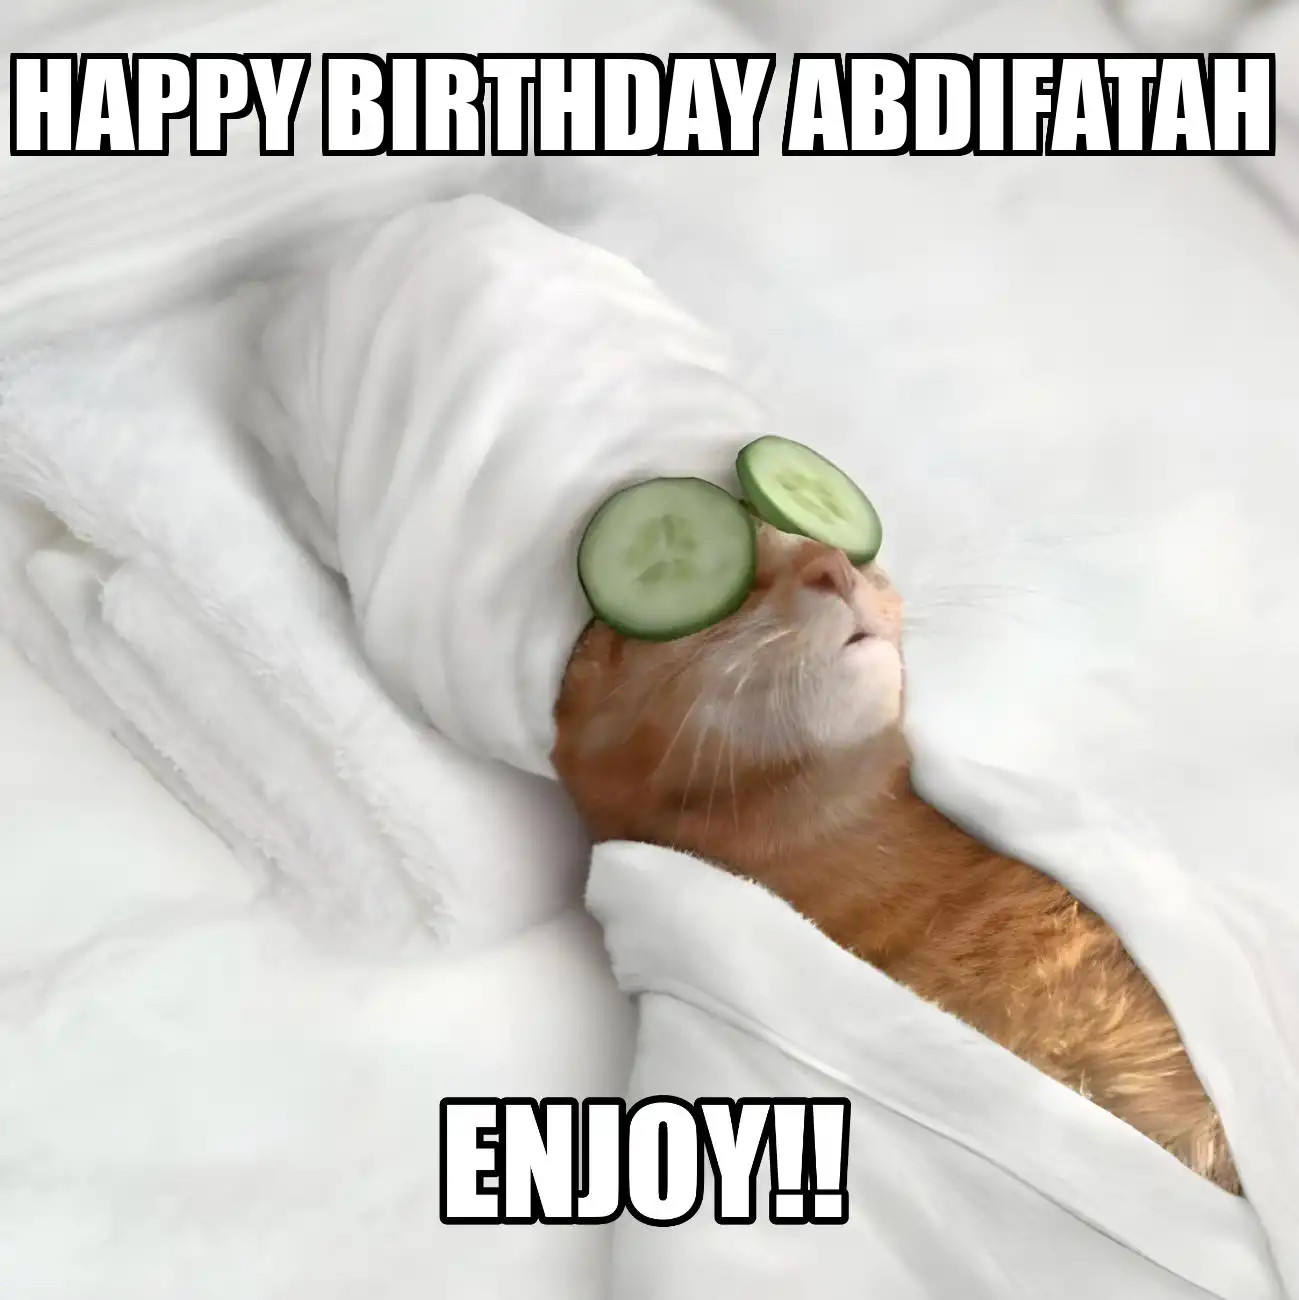 Happy Birthday Abdifatah Enjoy Cat Meme